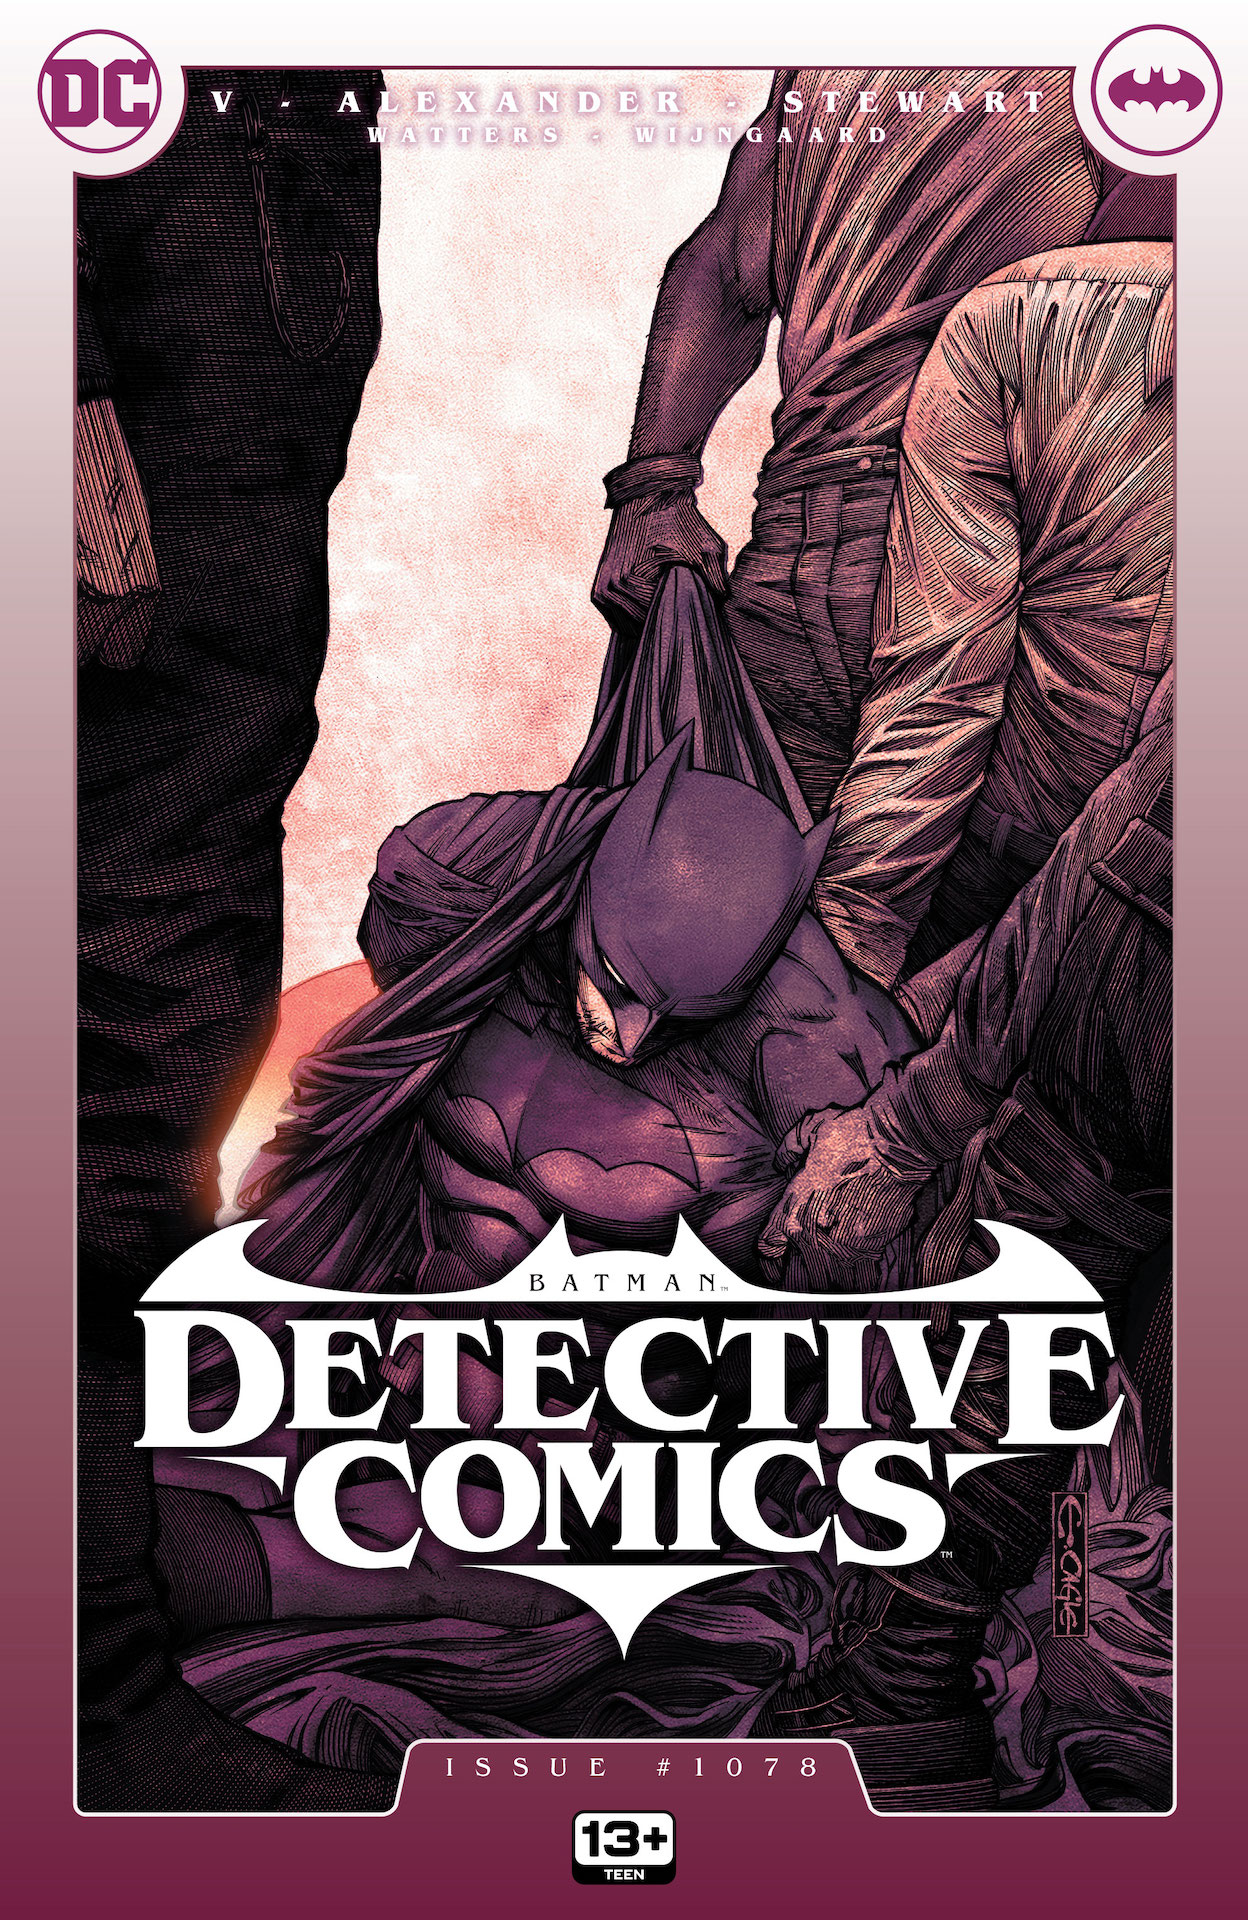 DC Preview: Detective Comics #1078